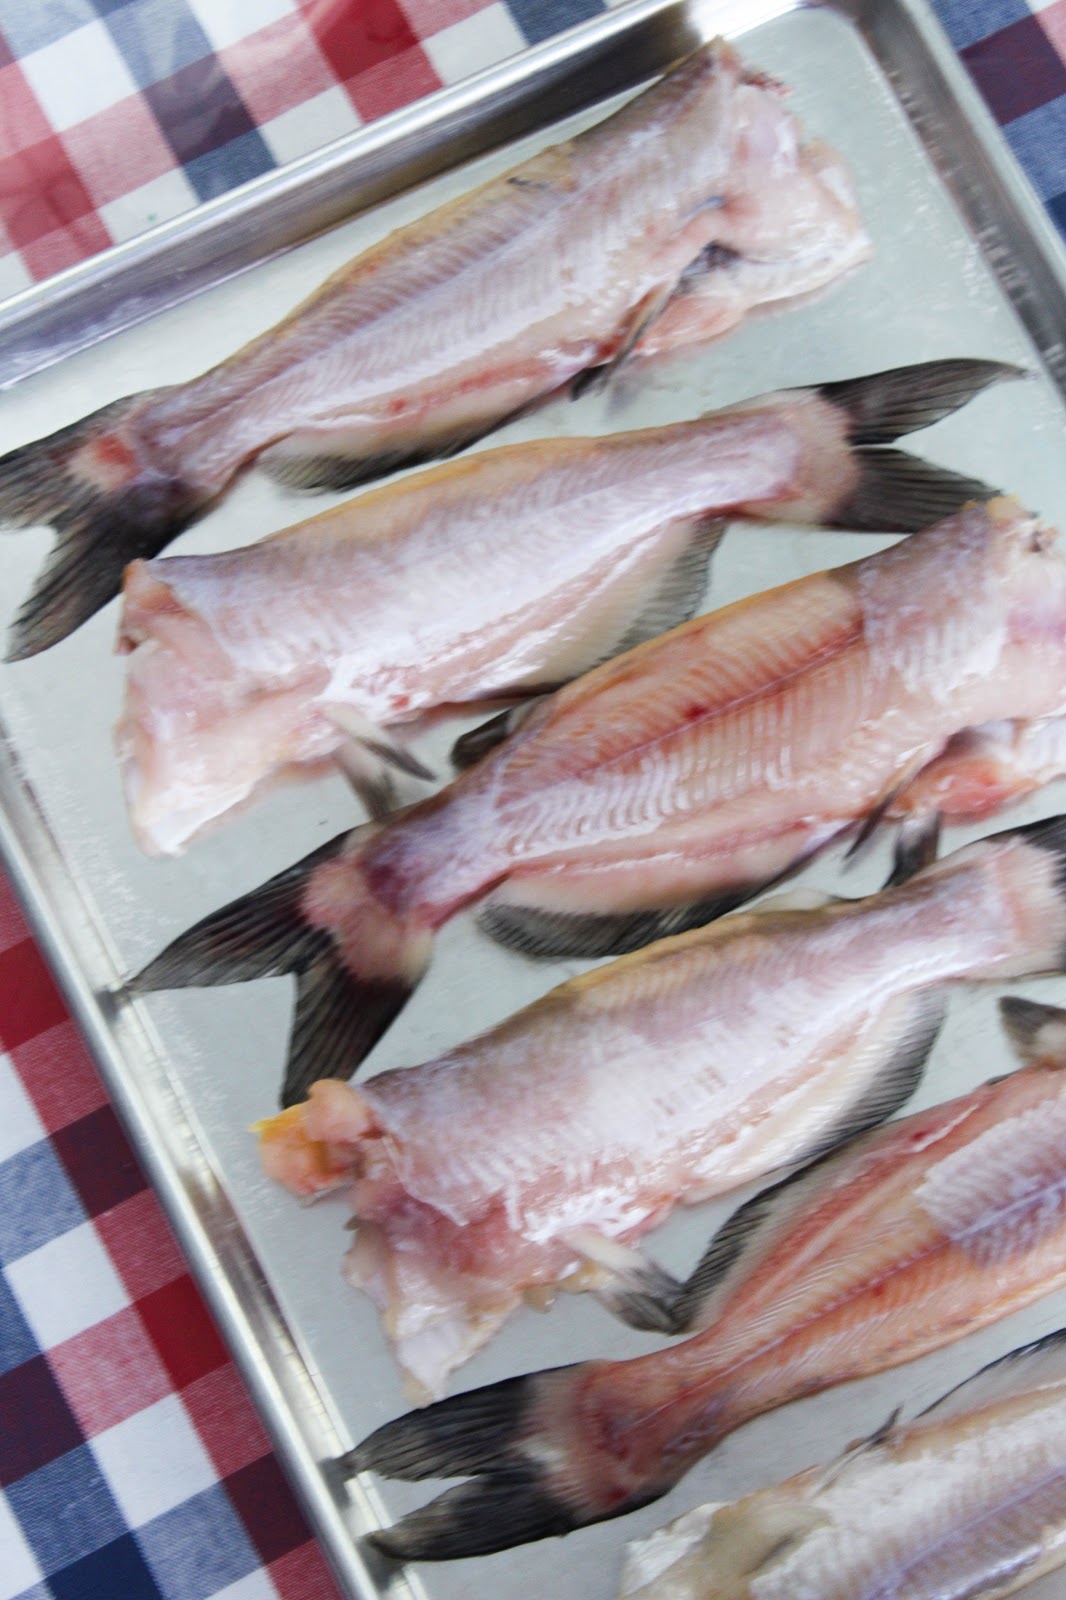 Southern Fried Whole Catfish